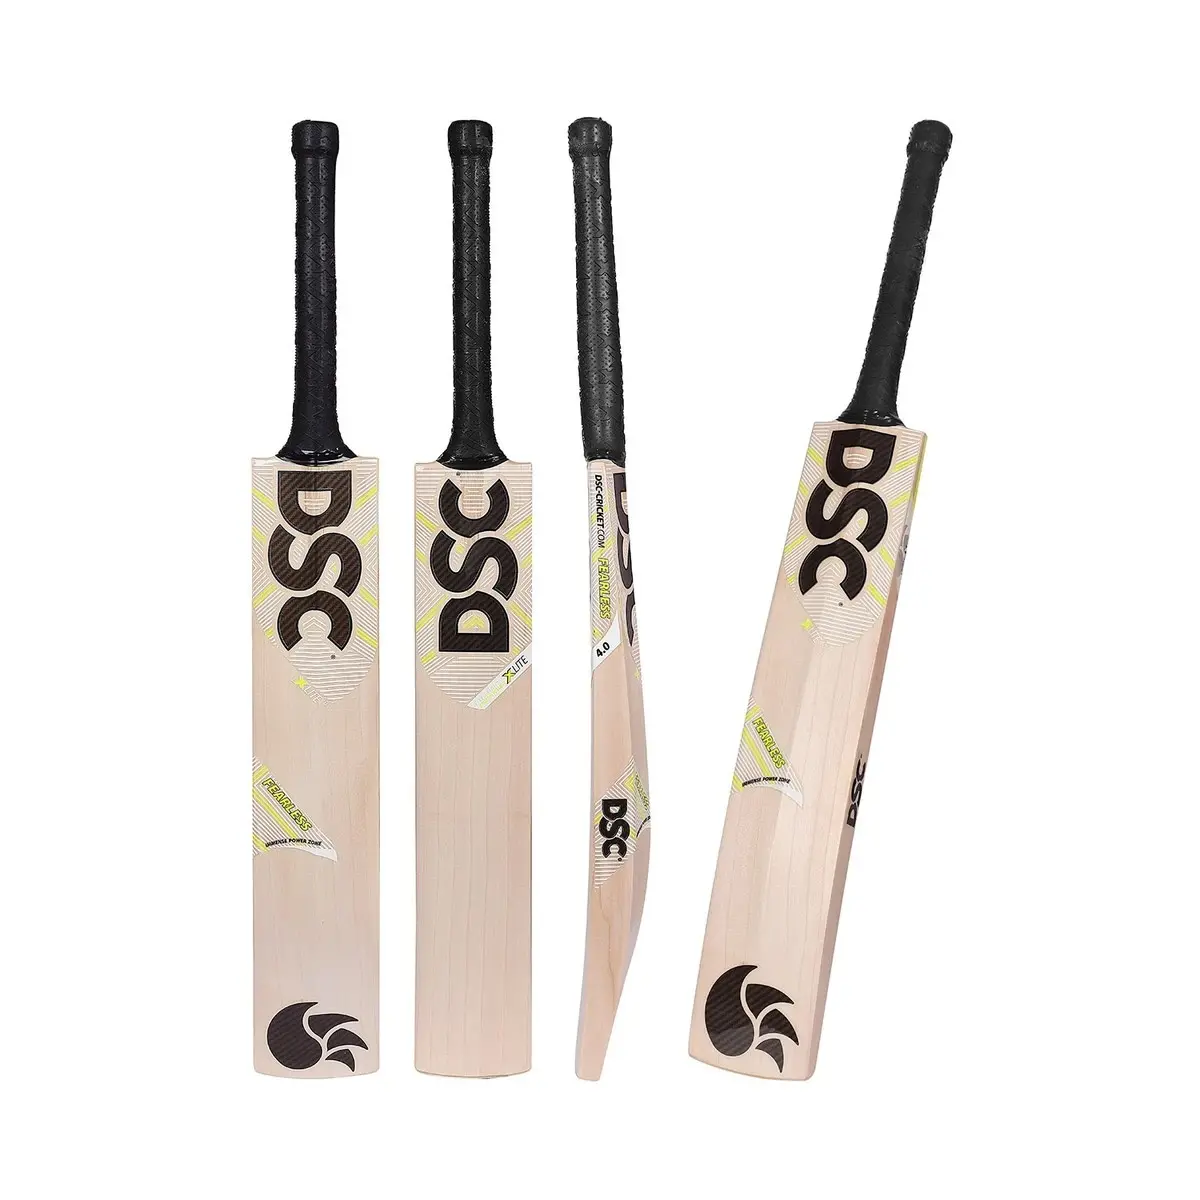 DSC Xlite 4.0 Cricket Bat 2020 